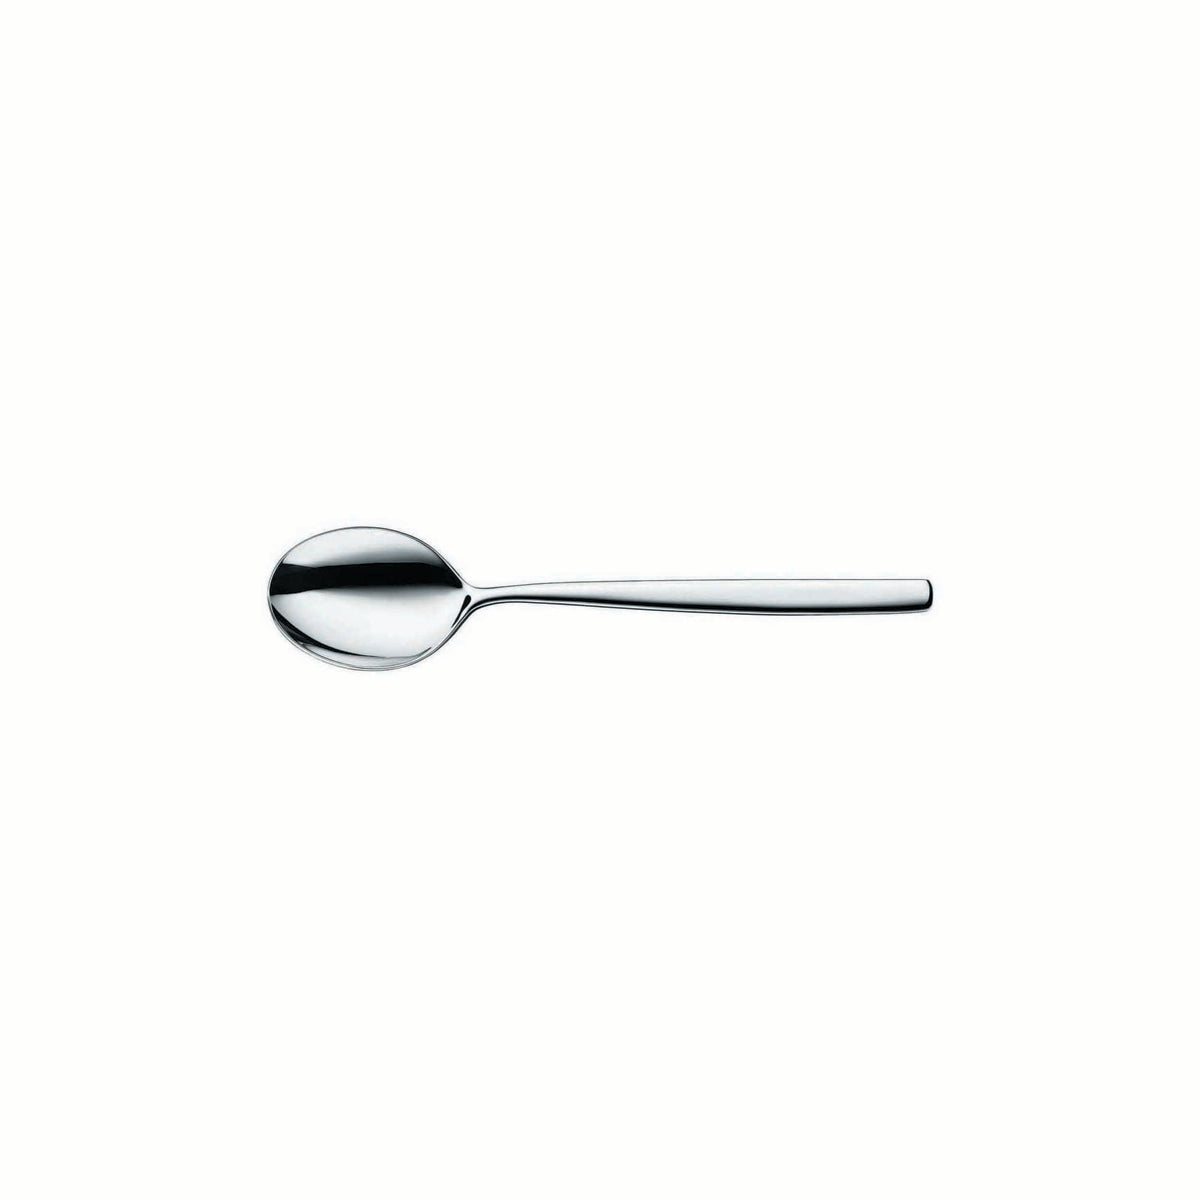 01.0401.6060 WMF Bistro Table Spoon Silverplated Tomkin Australia Hospitality Supplies